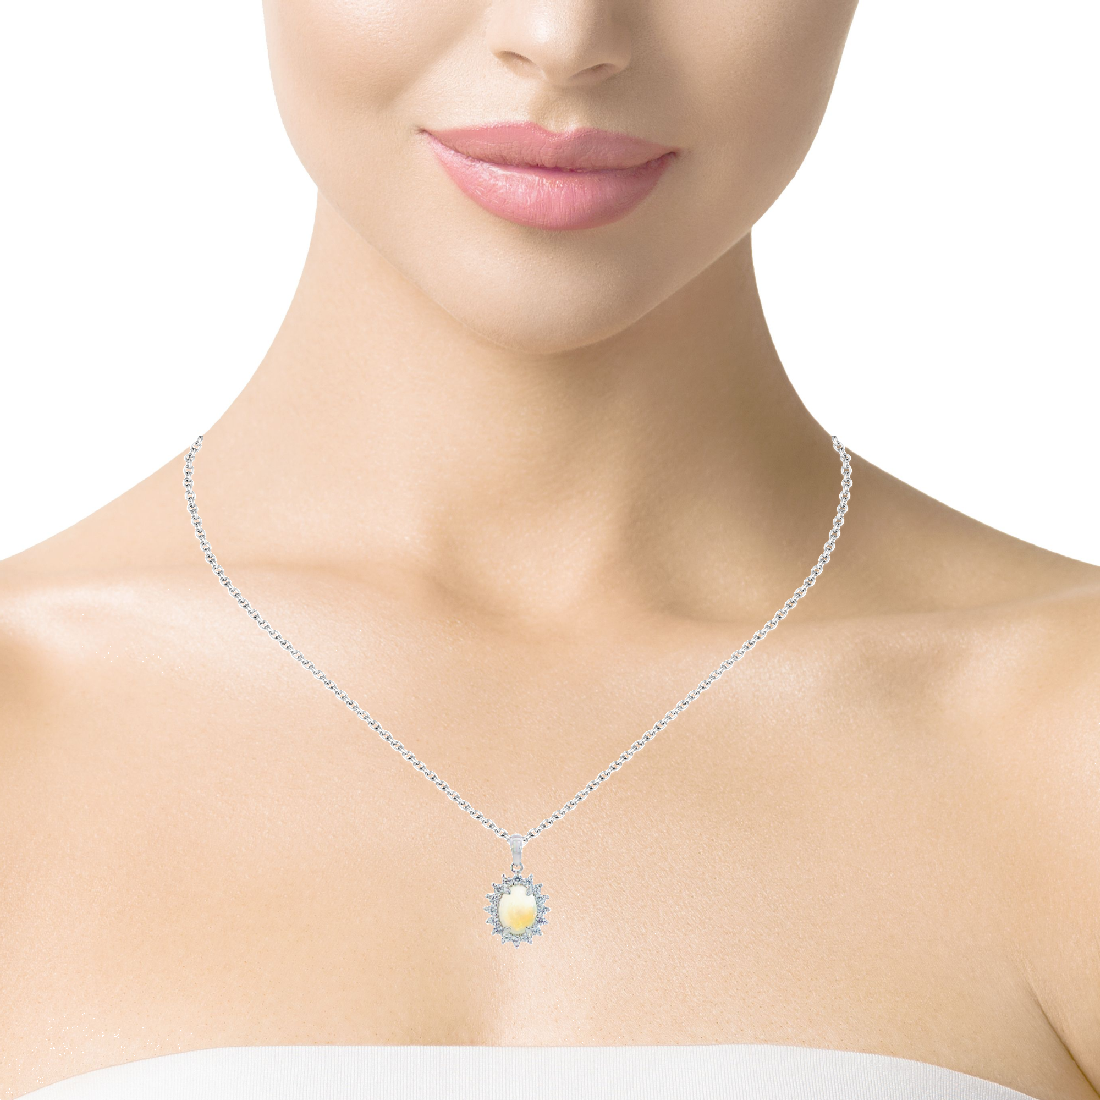 Sterling Silver 9x7mm White Opal pendant Necklace in cluster setting - Masterpiece Jewellery Opal & Gems Sydney Australia | Online Shop